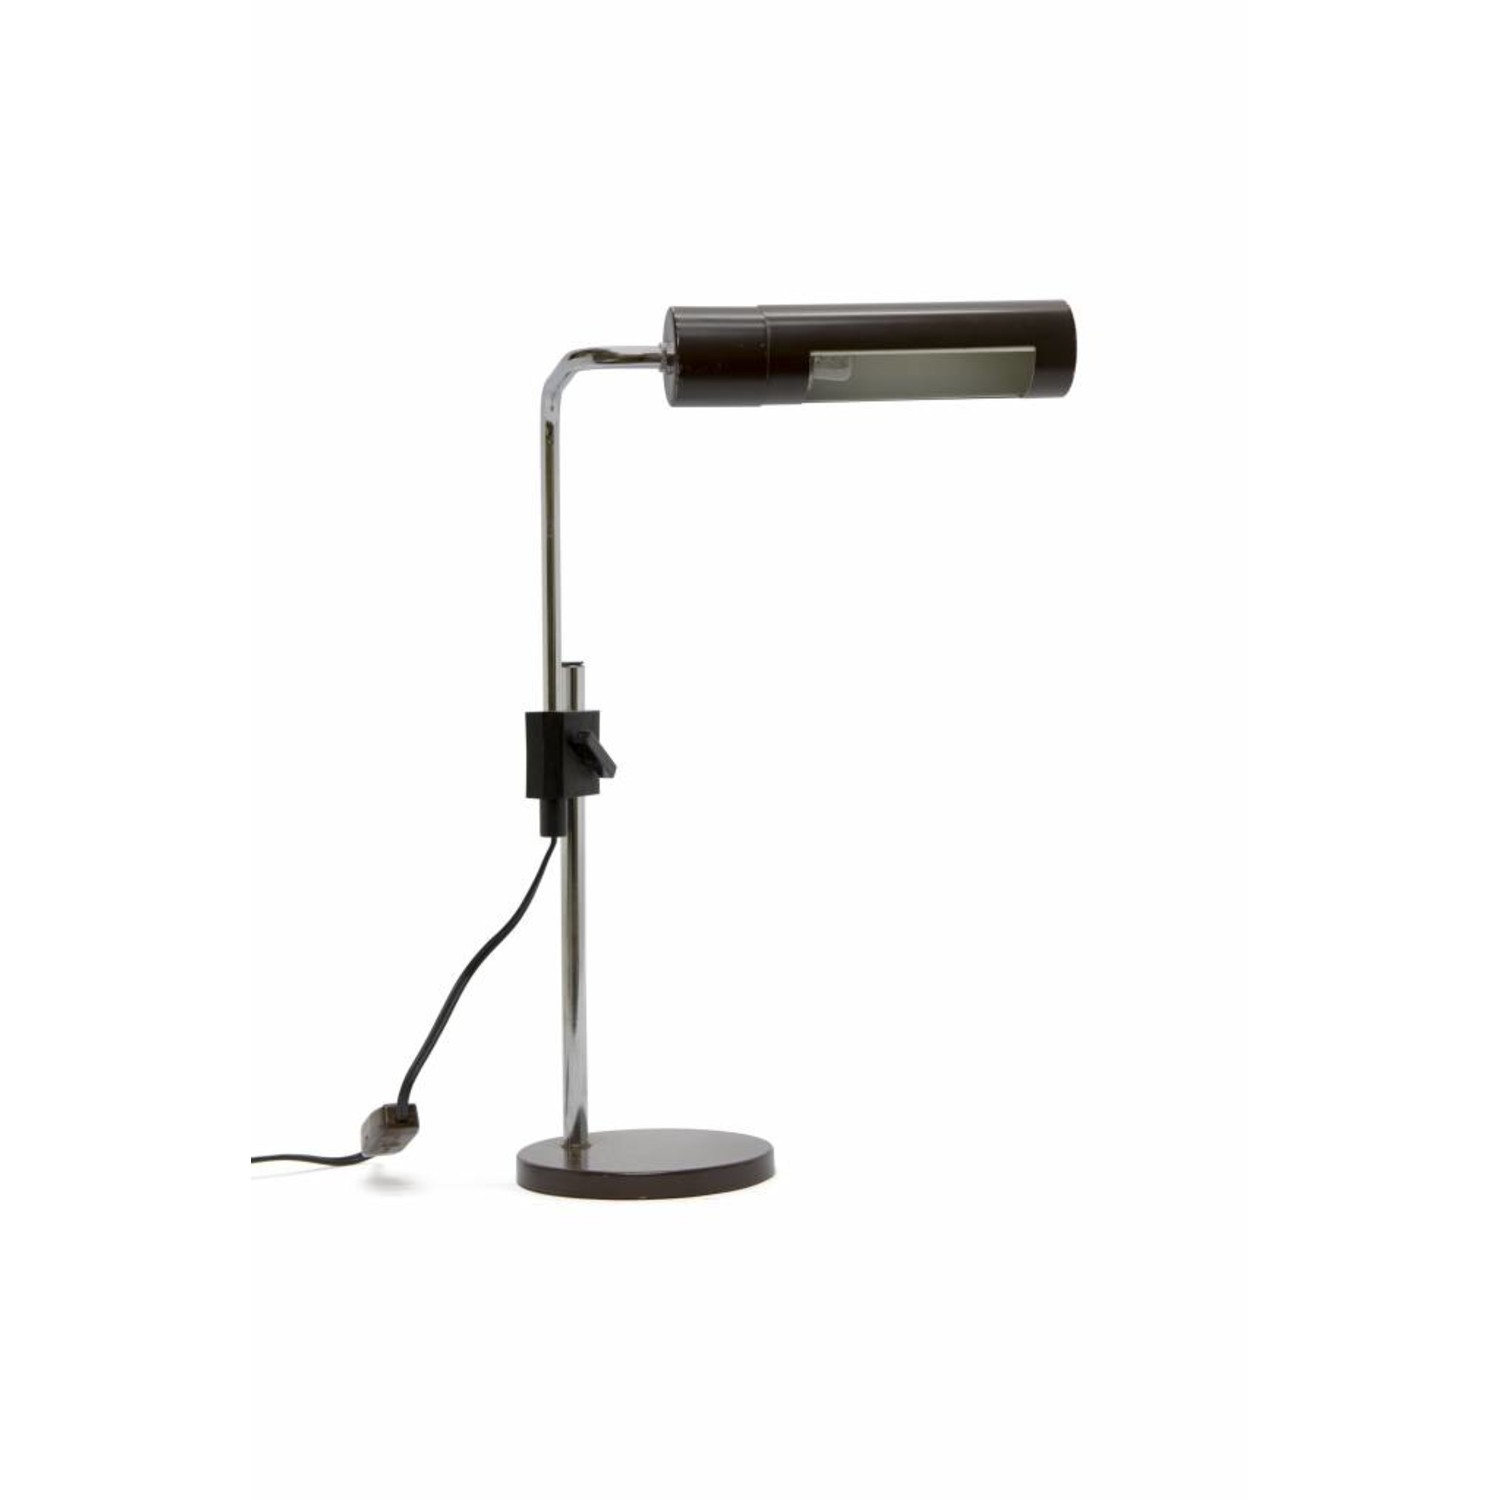 Featured image of post Extendable Desk Lamp / Clip holder usb led desk lamp flexible table lamp bedside lamp book light for the bedroom living room home decoration.